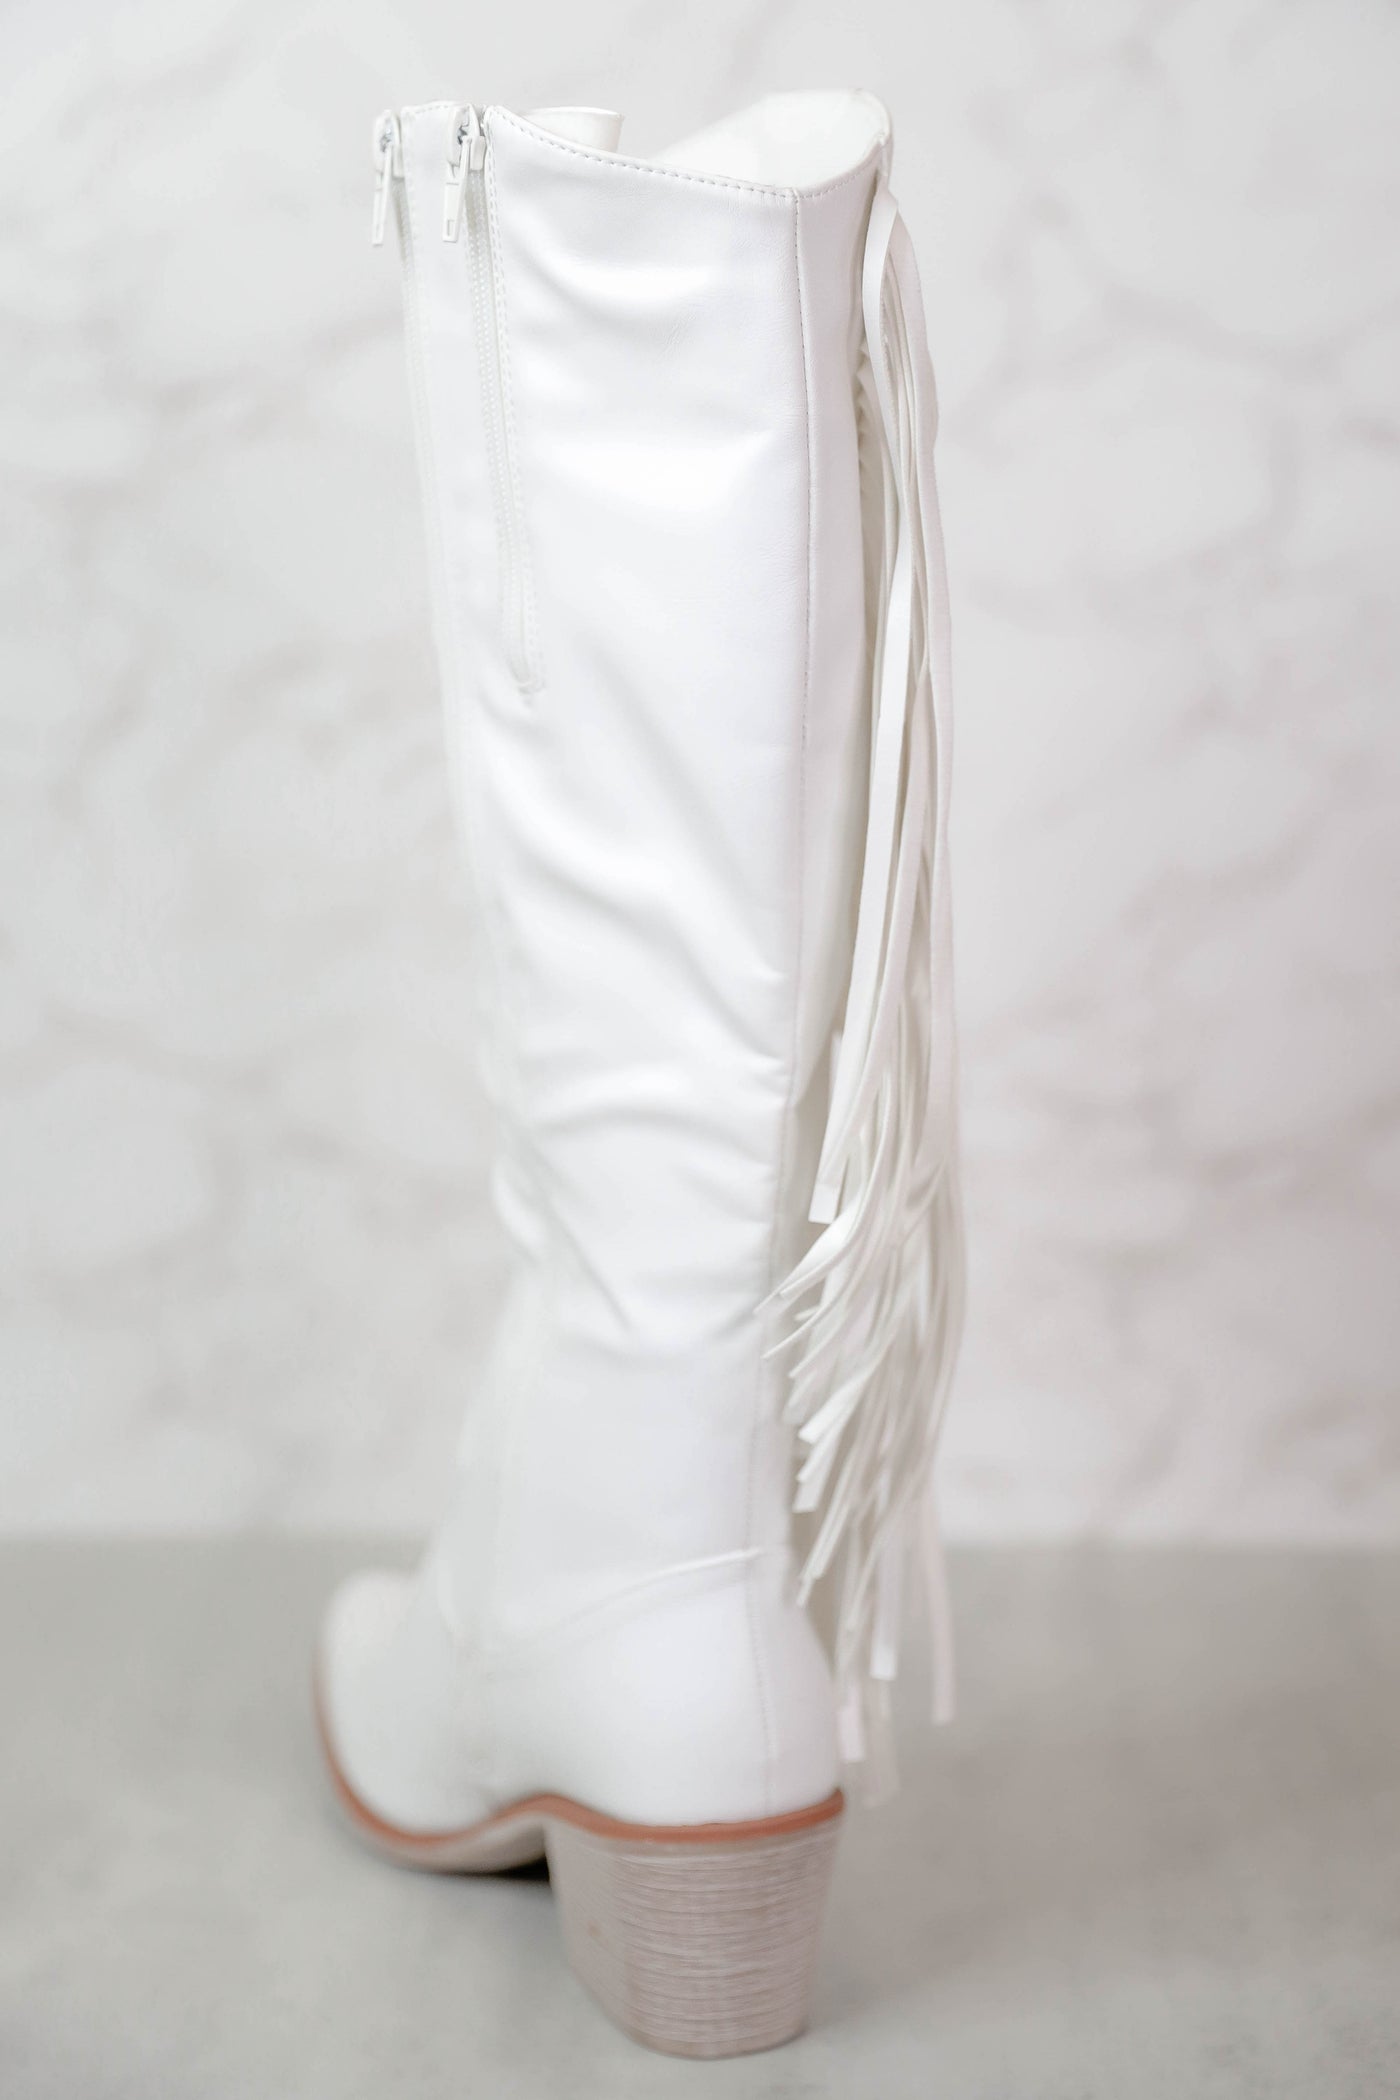 Tall Fringe Western Boots- White Fringe Boots For Women- Pierre Dumas Fringe Boots